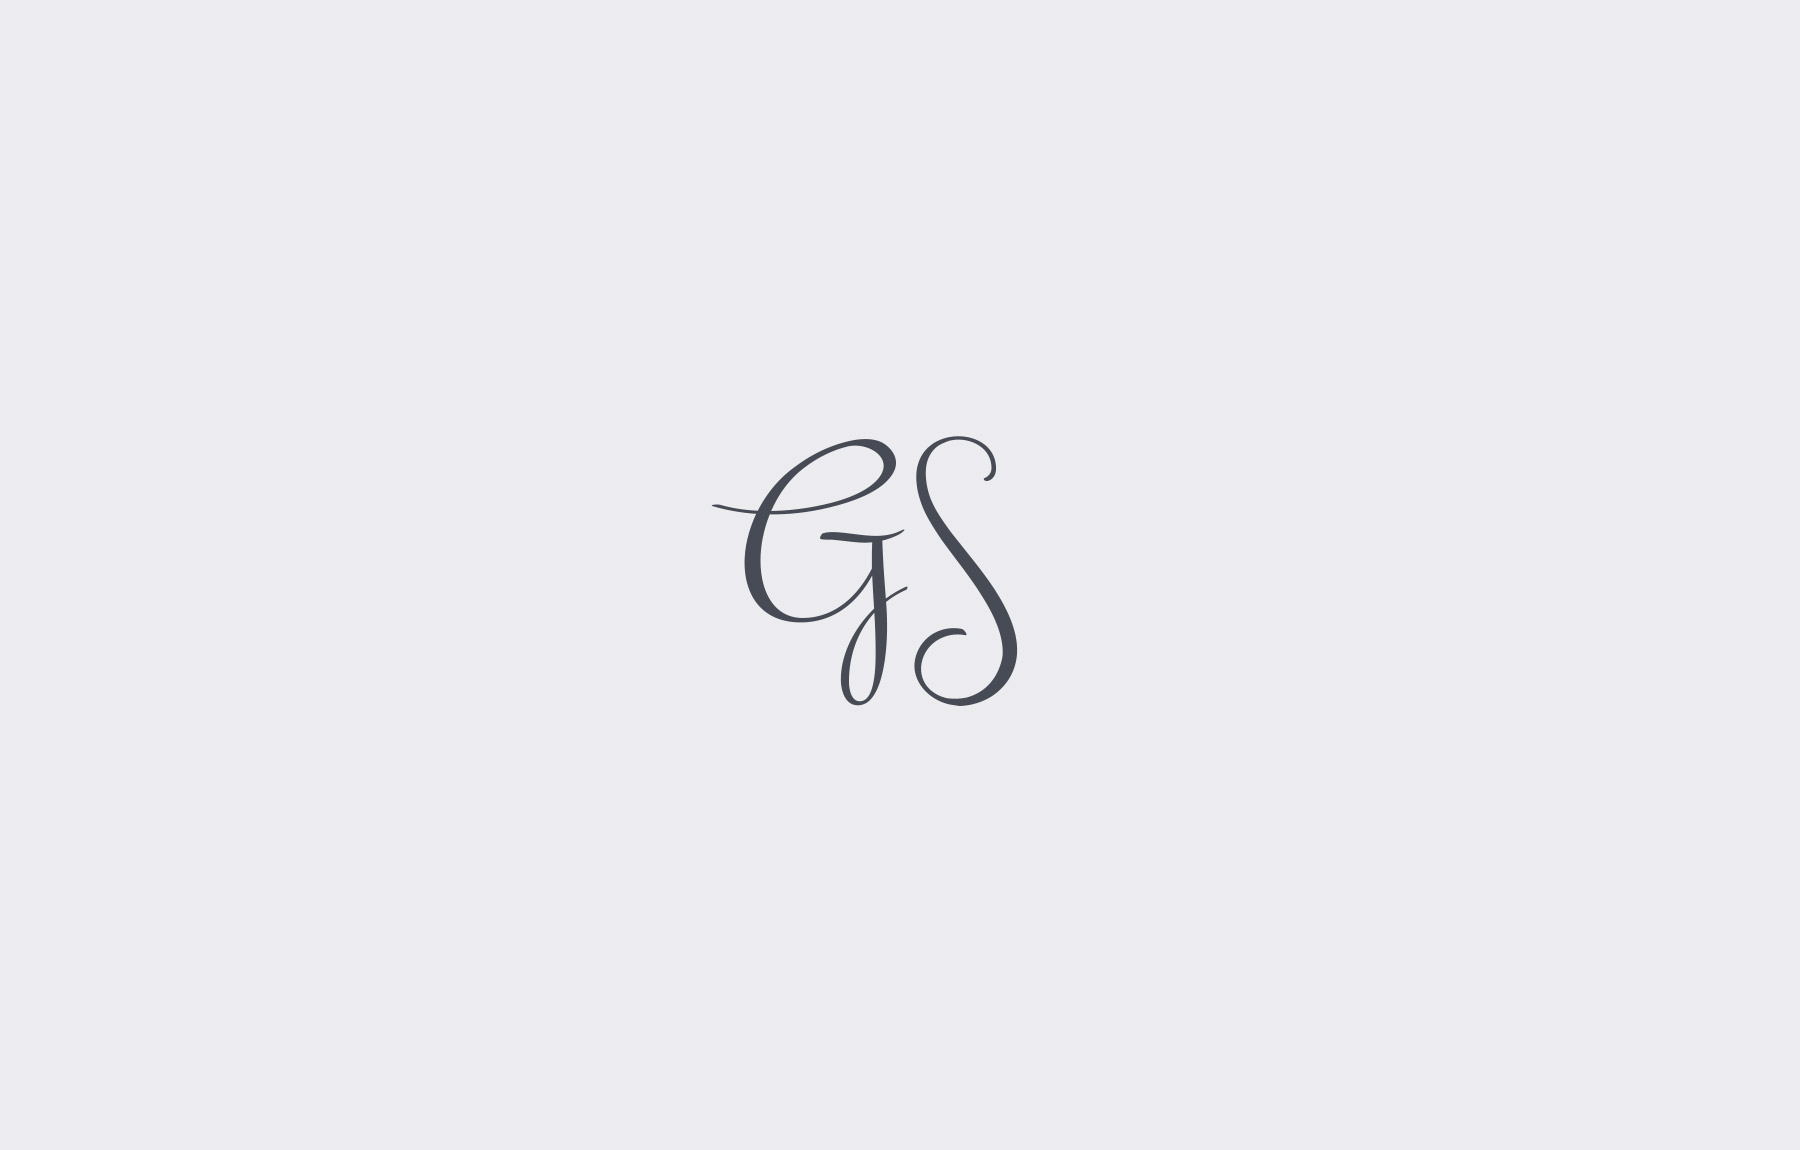 Cute GS monogram logo